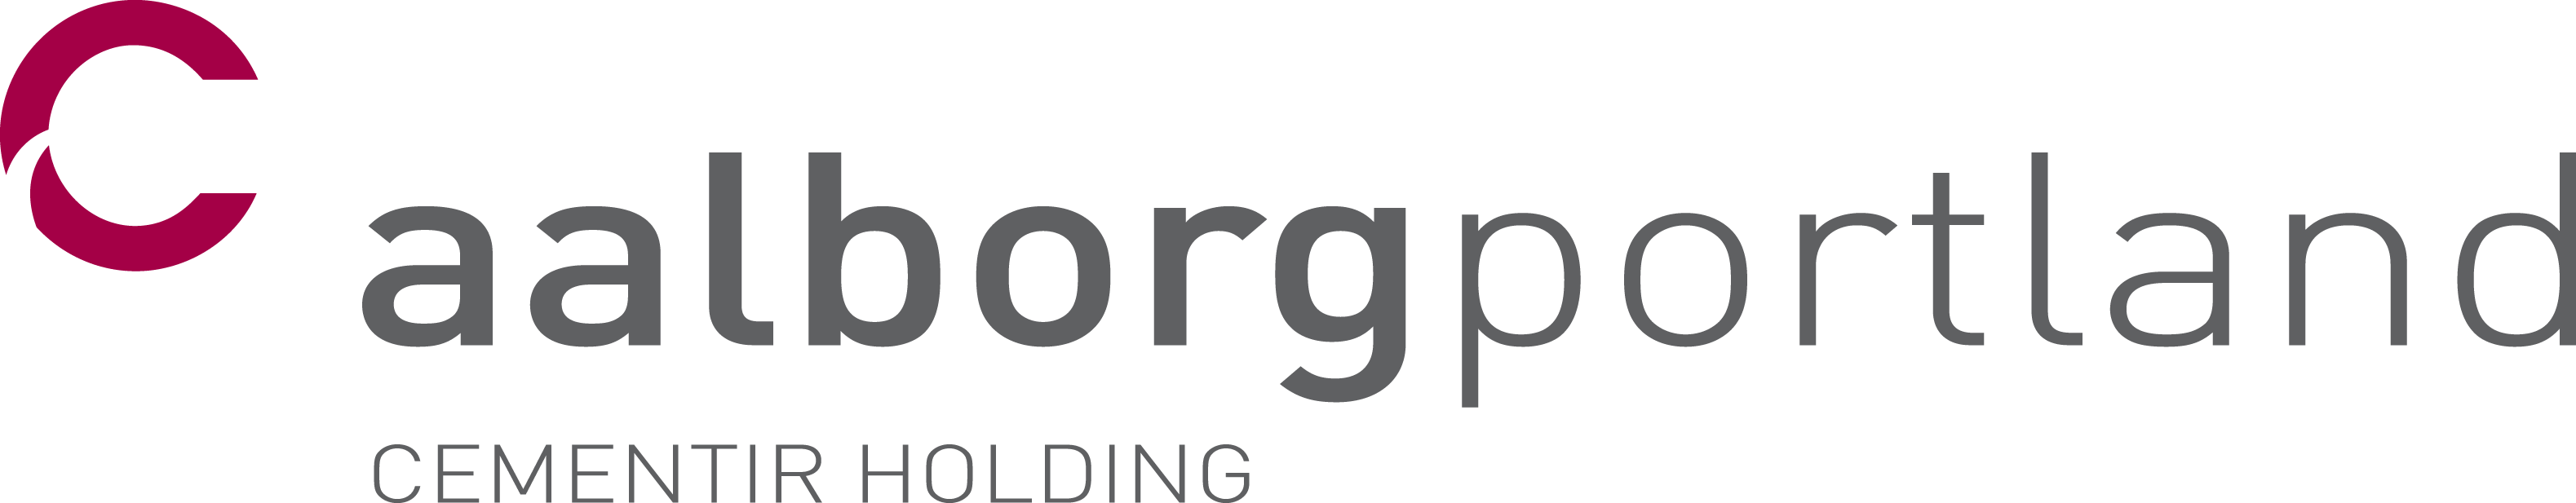 Aalborg Portland Cementir Holding Logo